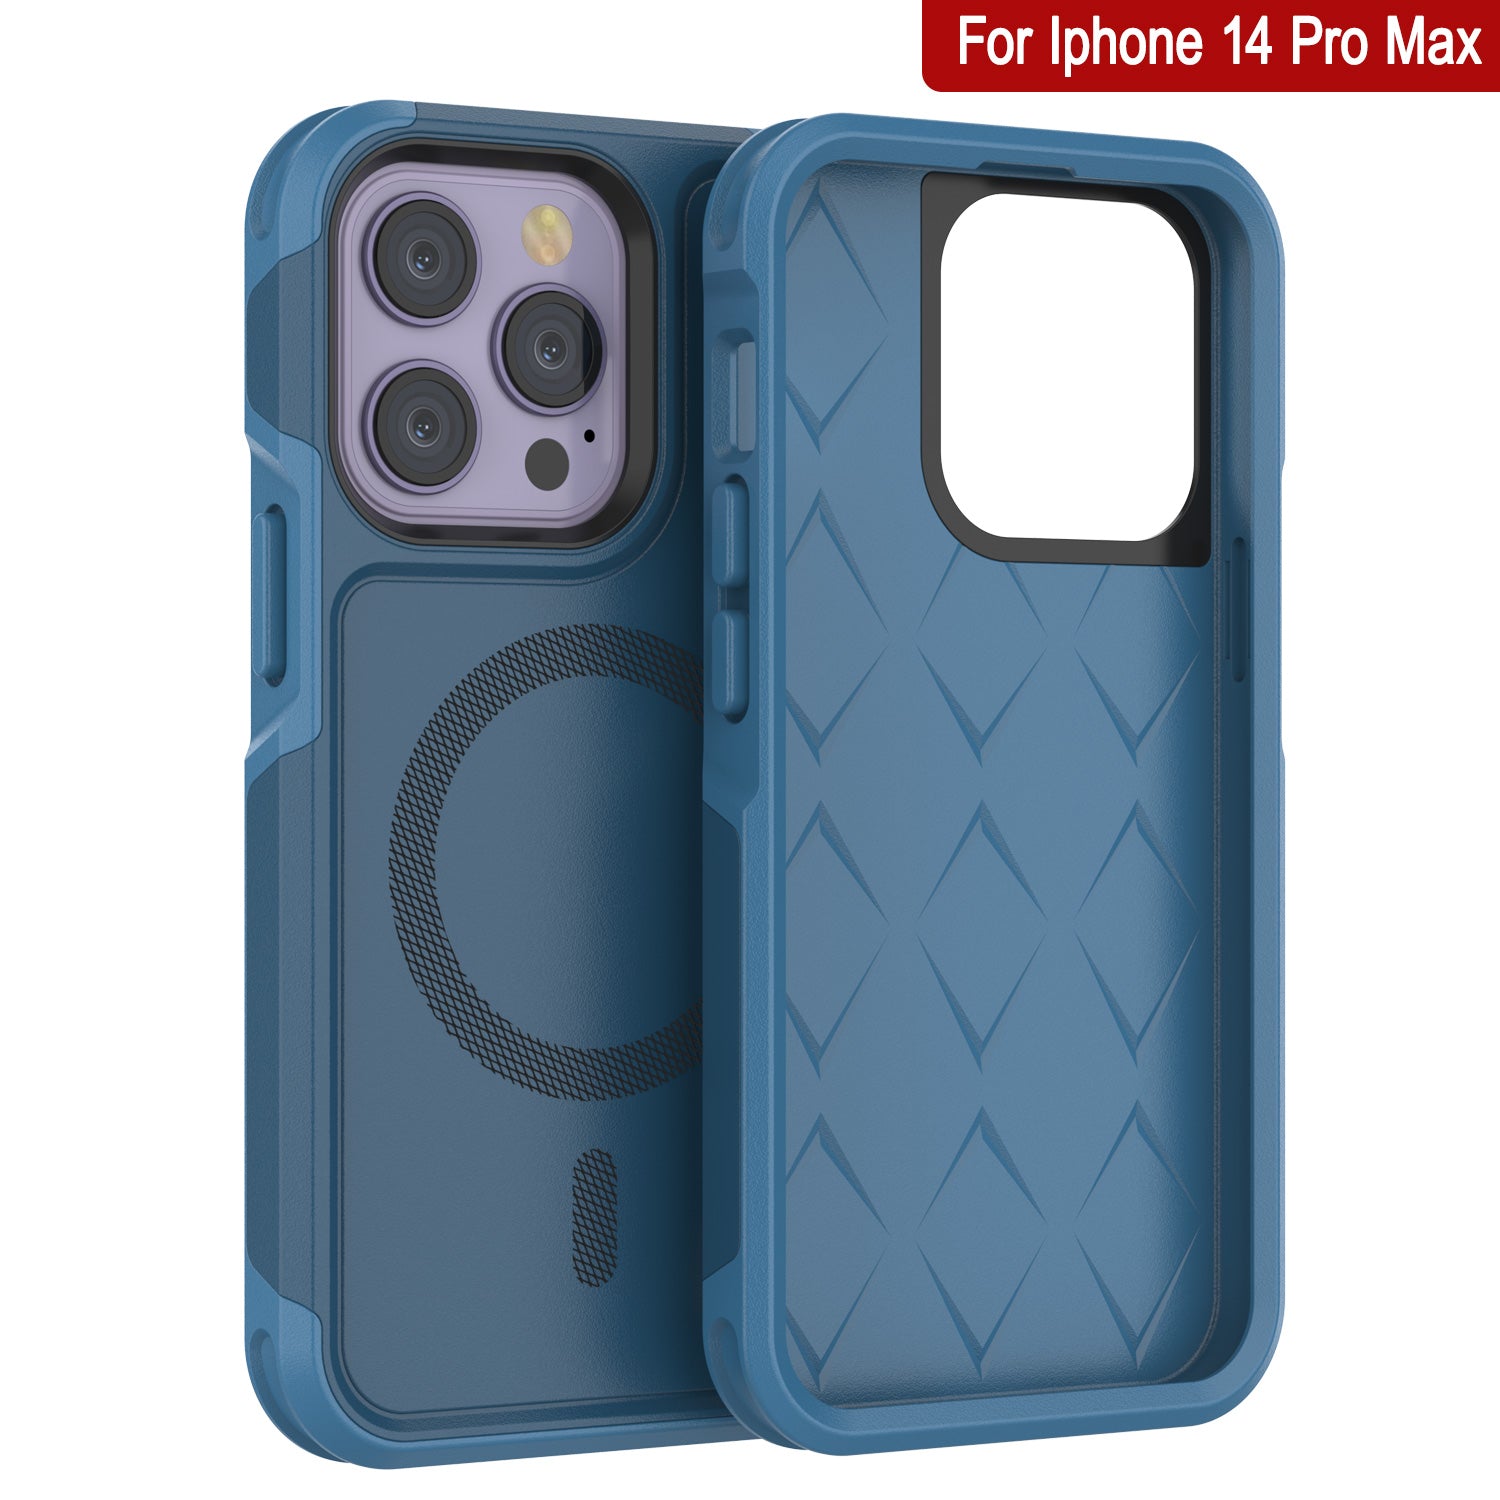 Iphone 14 Pro Max Cases Spartan, Capa Iphone 12 Pro Max Spartan